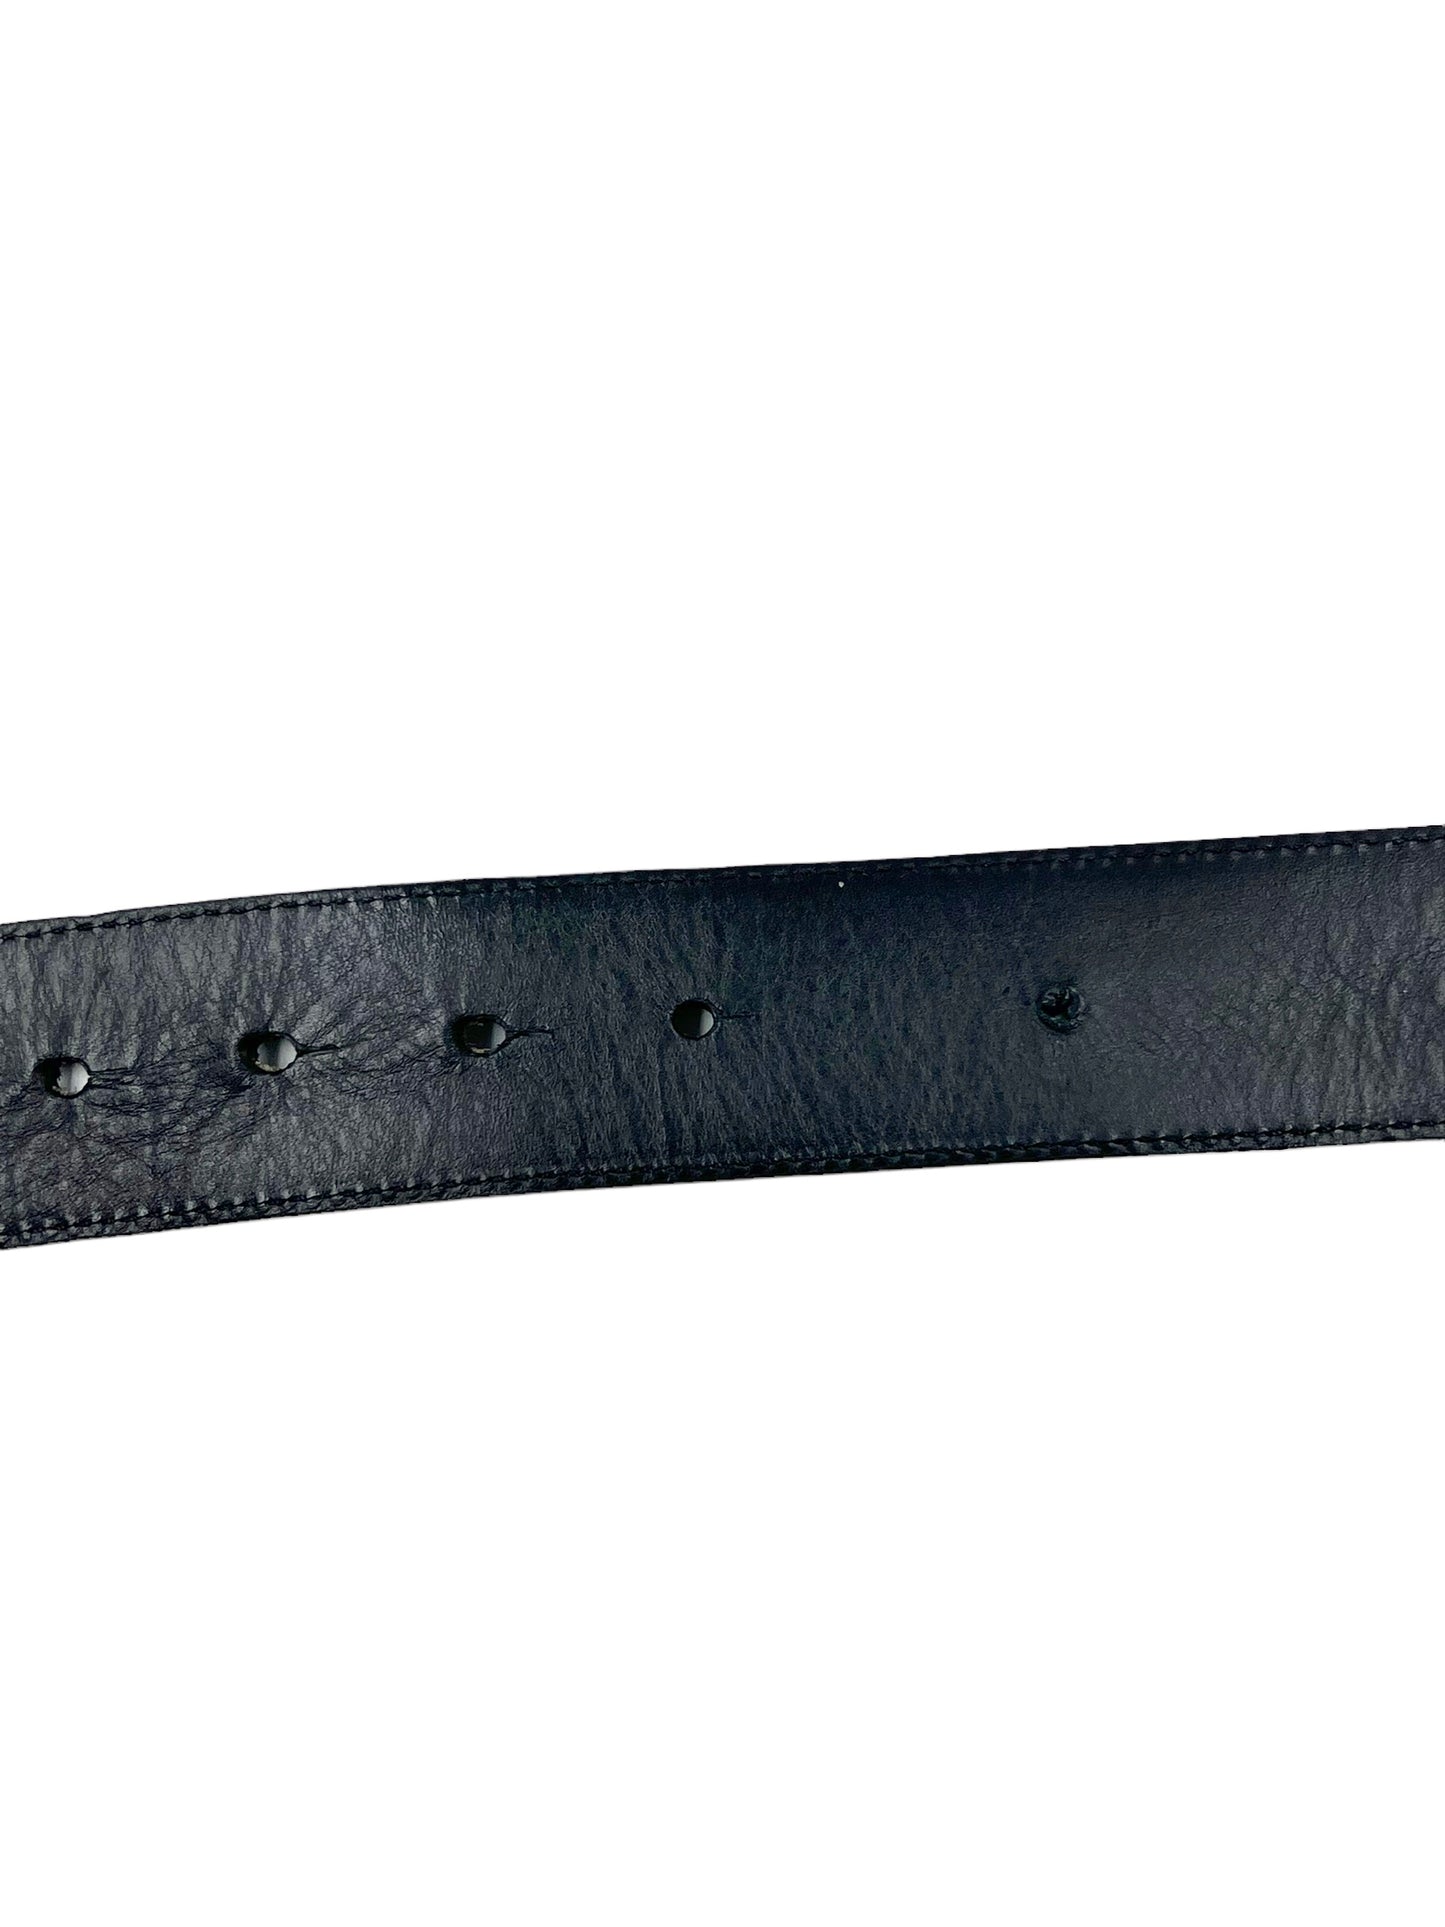 Versace Black Size 90/38 Large Round Medusa Leather Buckle Belt